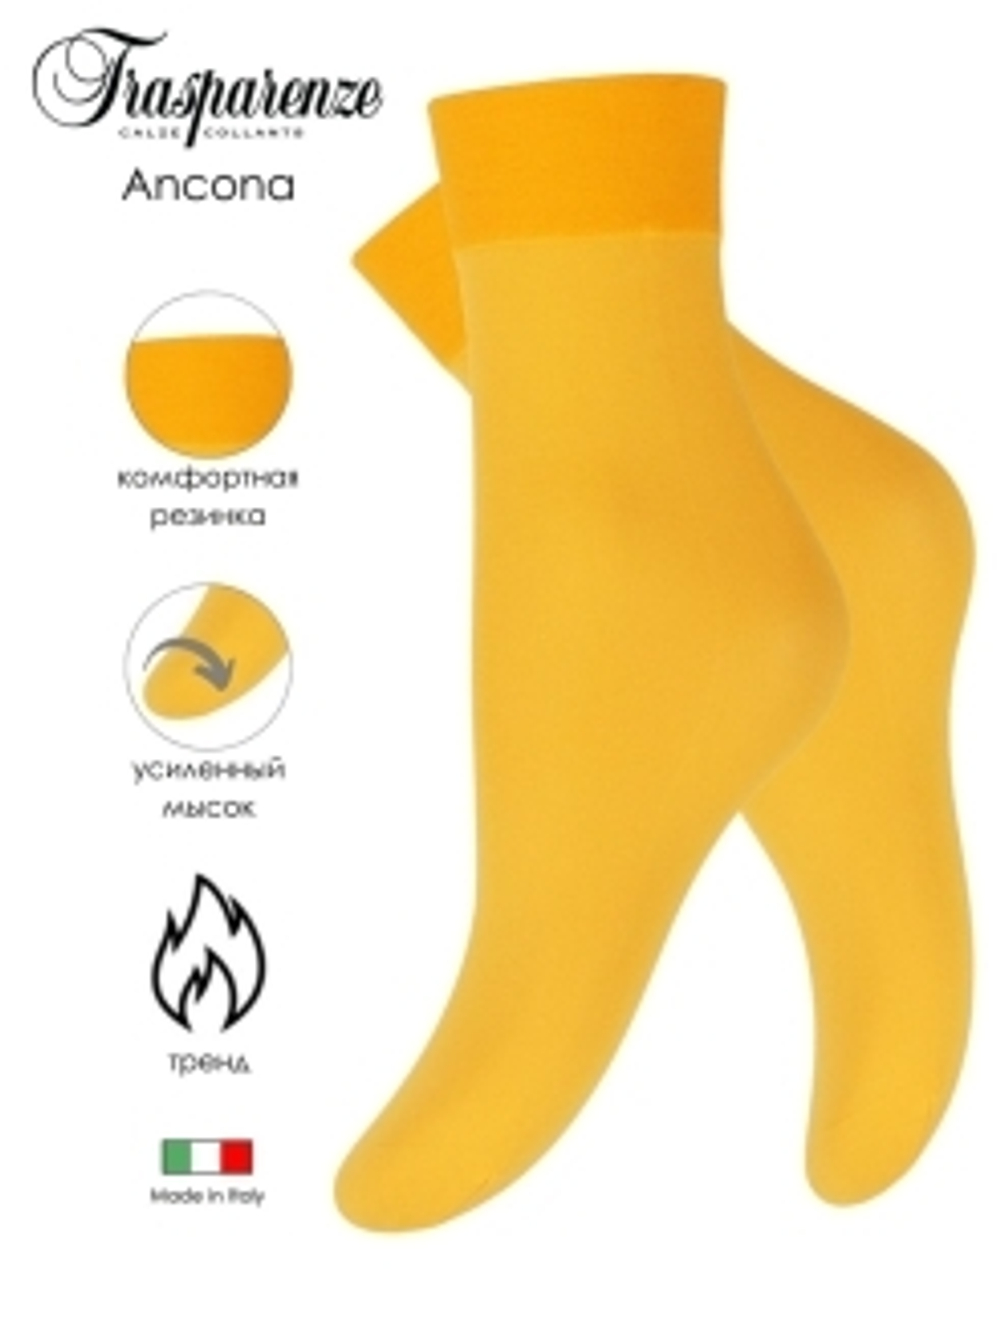 Mademoiselle Ancona (носки, 1 пара)